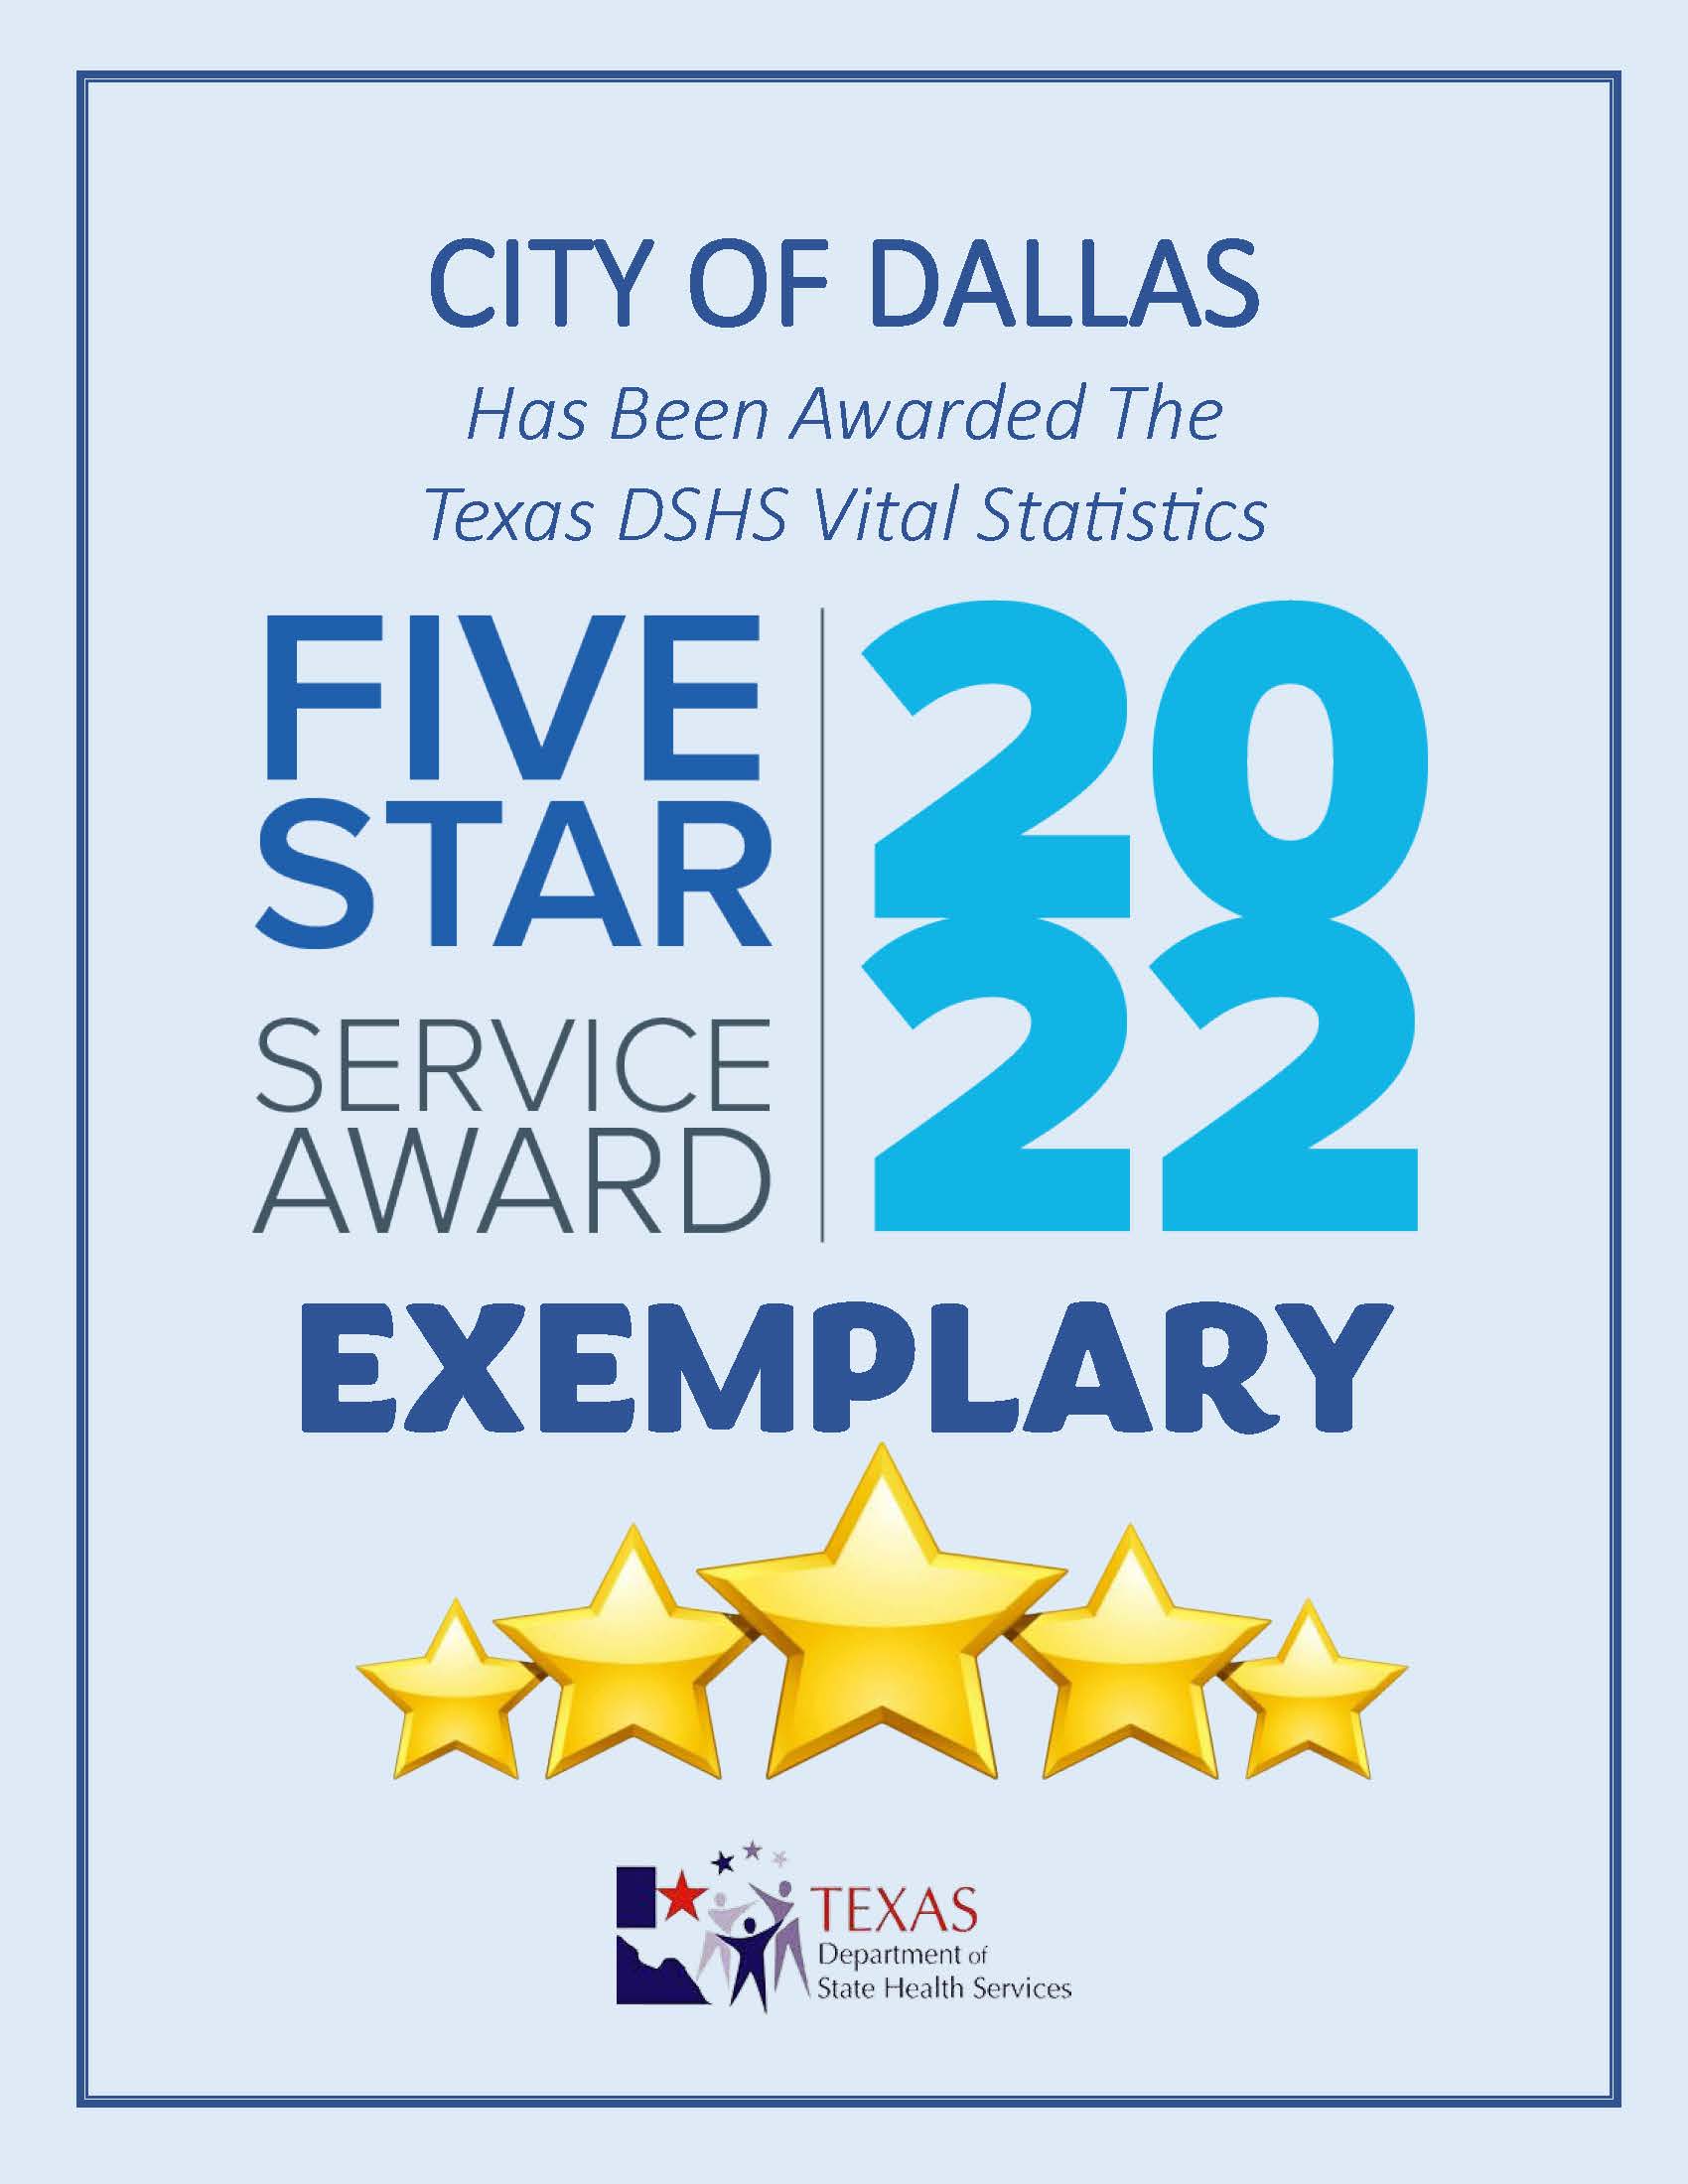 Five Star Service Award image